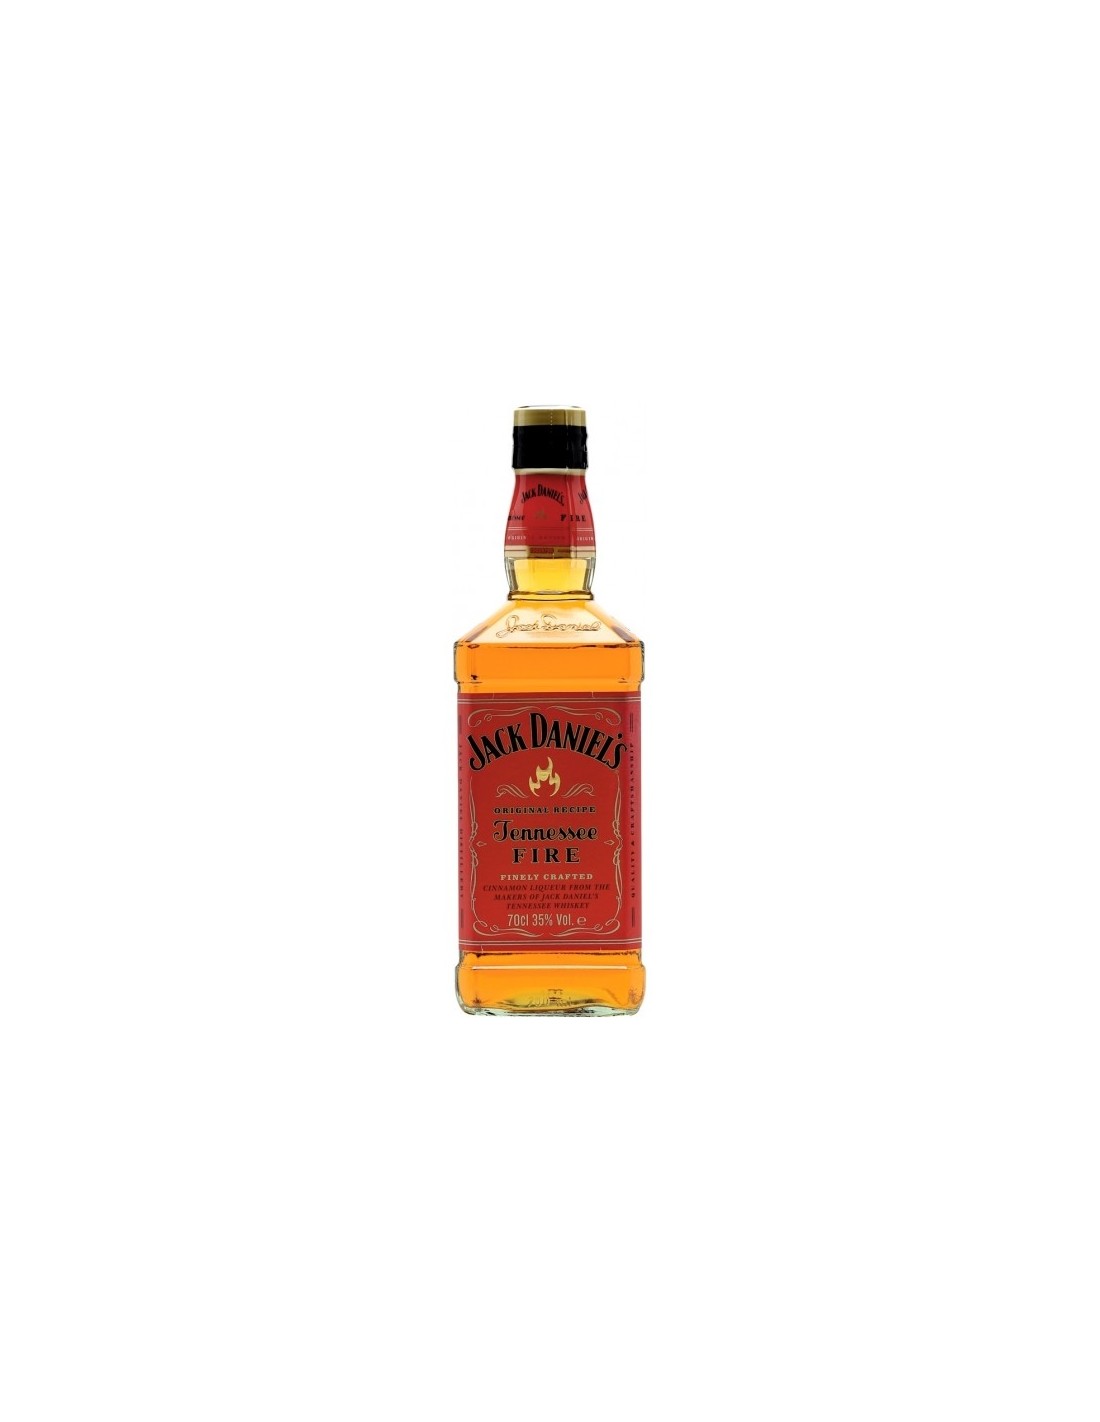 Whisky Jack Daniel’s Fire 0.7L, 35% alc., SUA alcooldiscount.ro